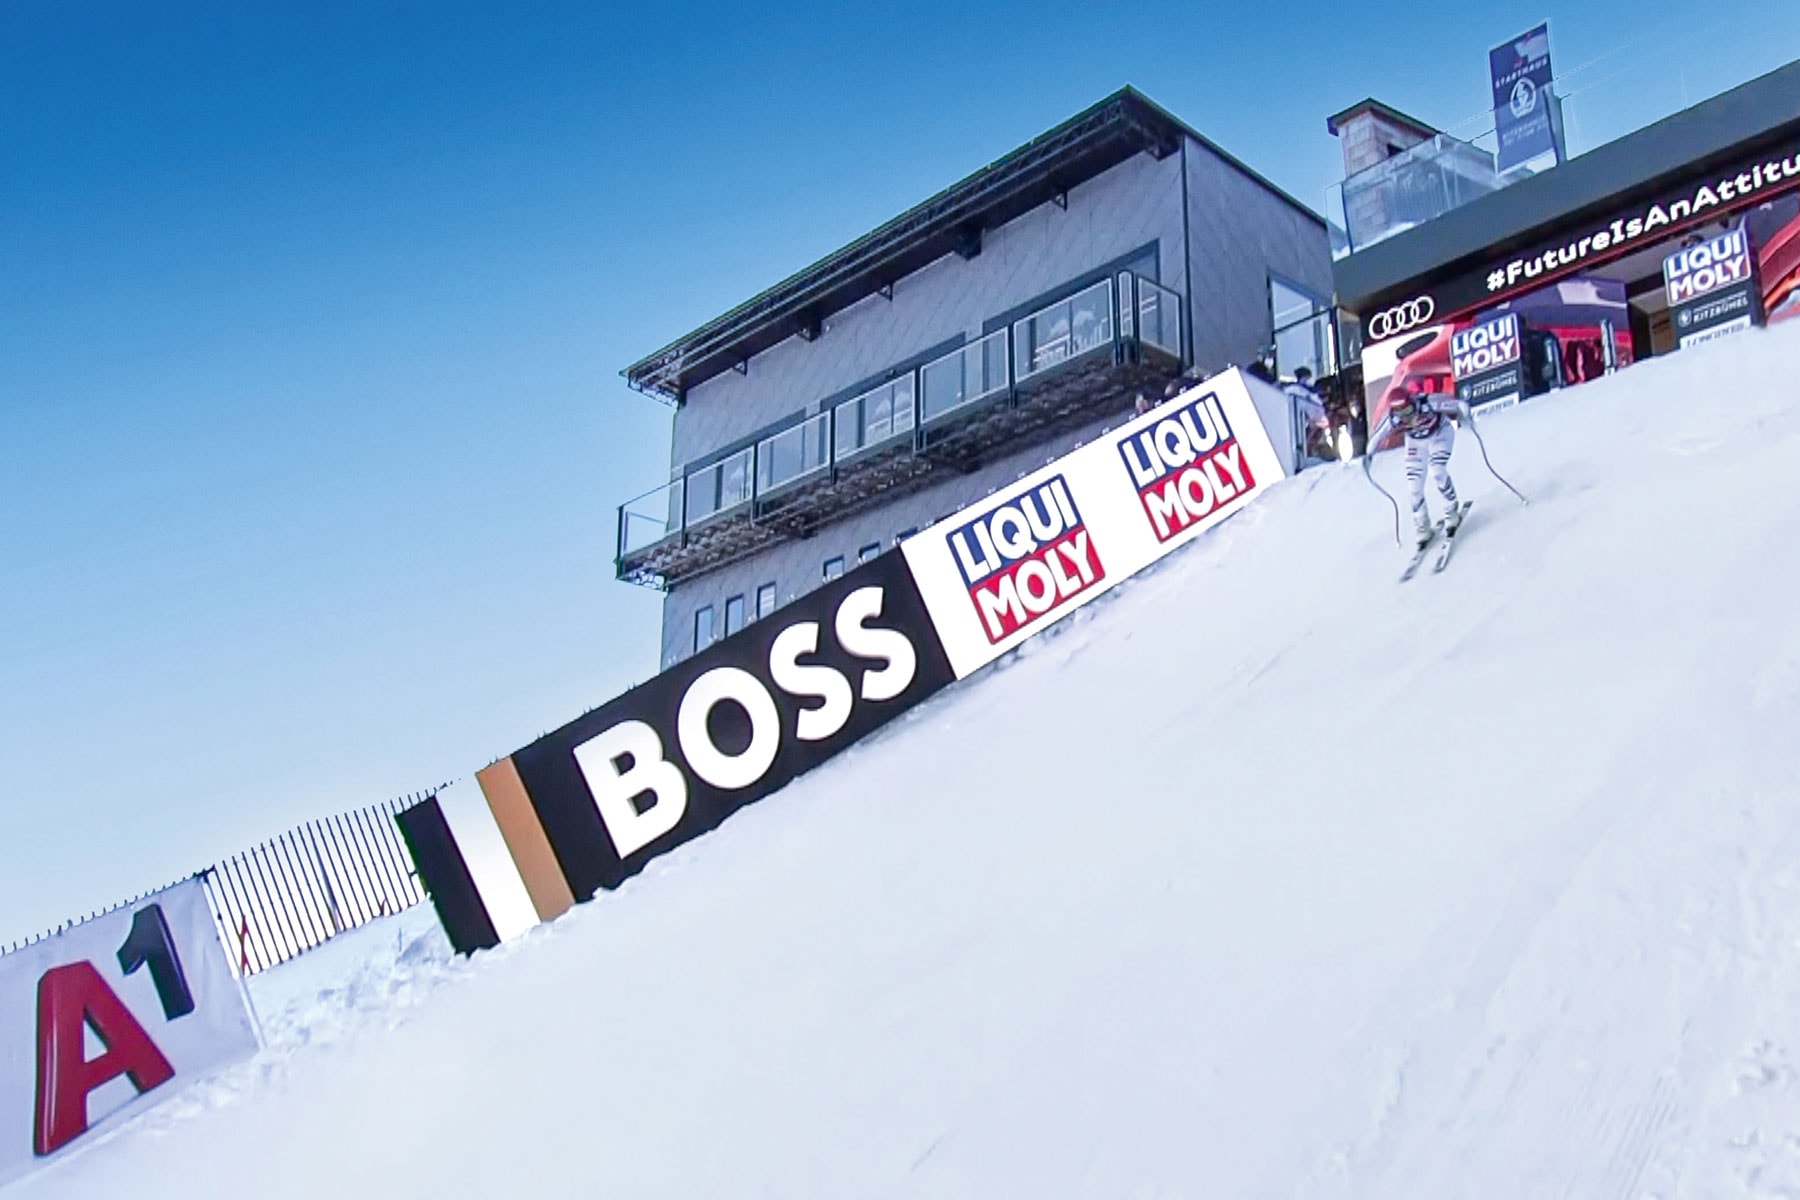 BOSS 全新 Logo 亮相传奇滑雪赛事——哈嫩卡姆大赛